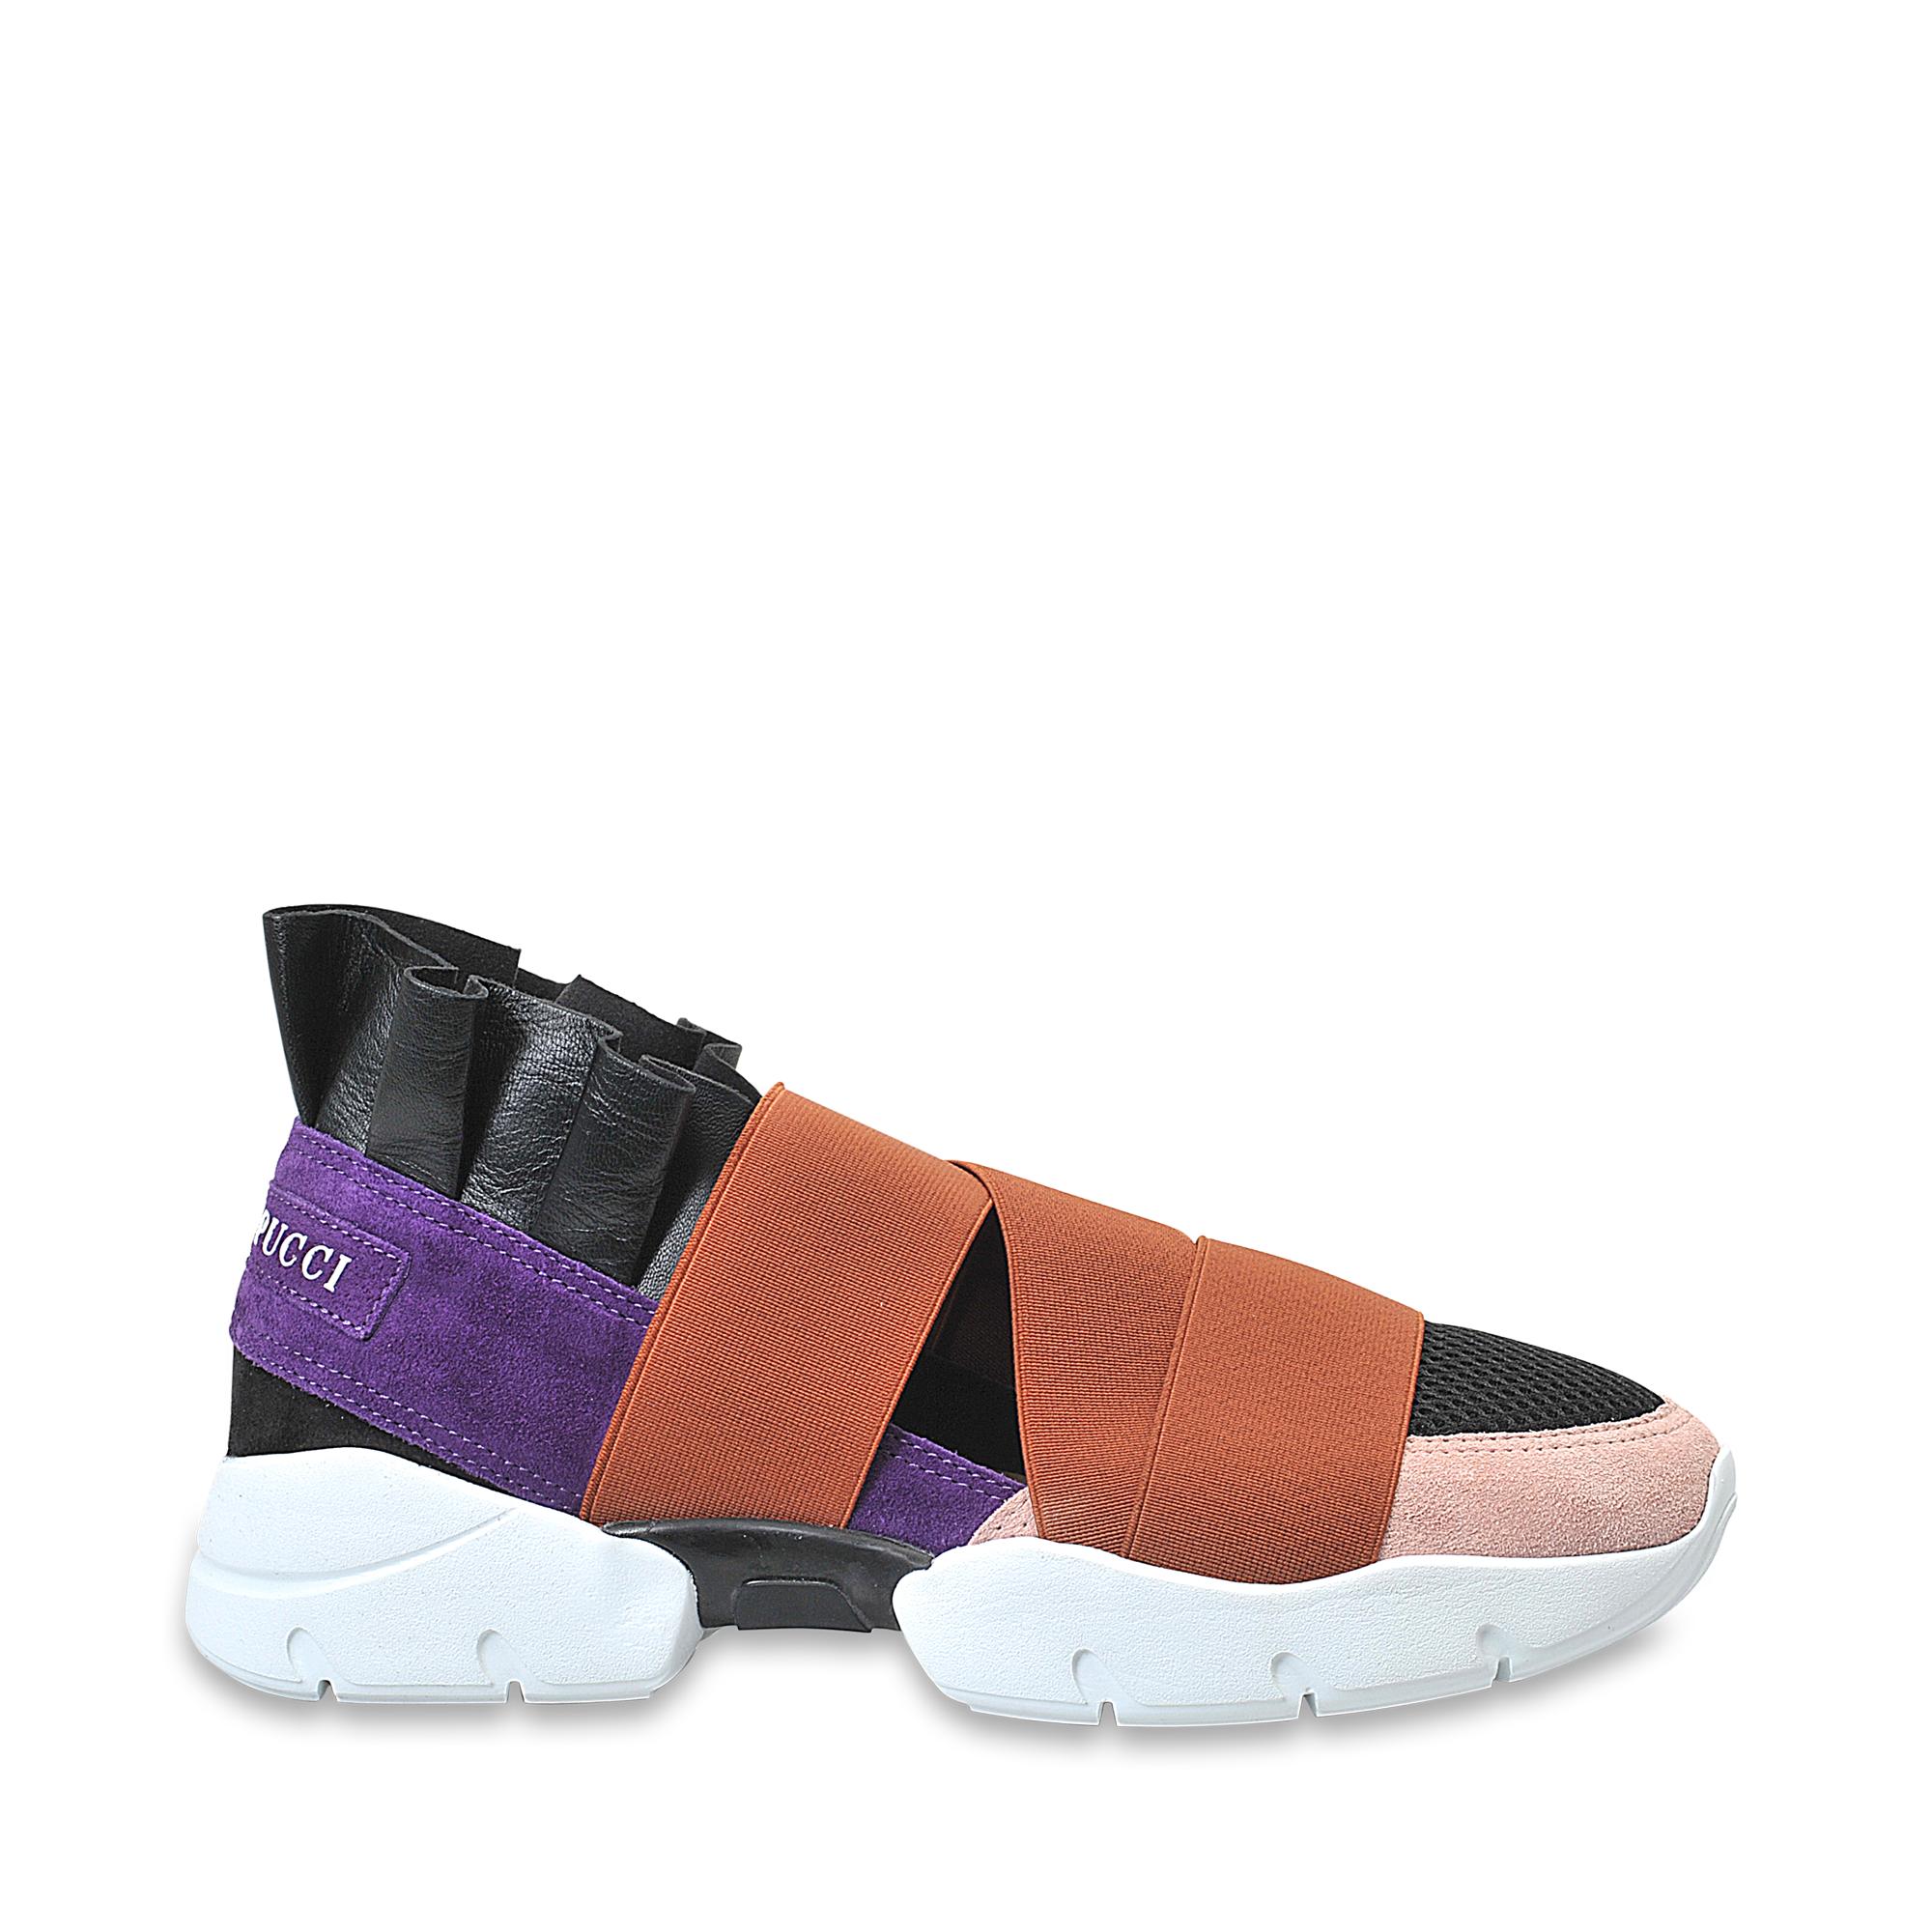 Emilio pucci Ruffle Sneakers in Multicolor | Lyst